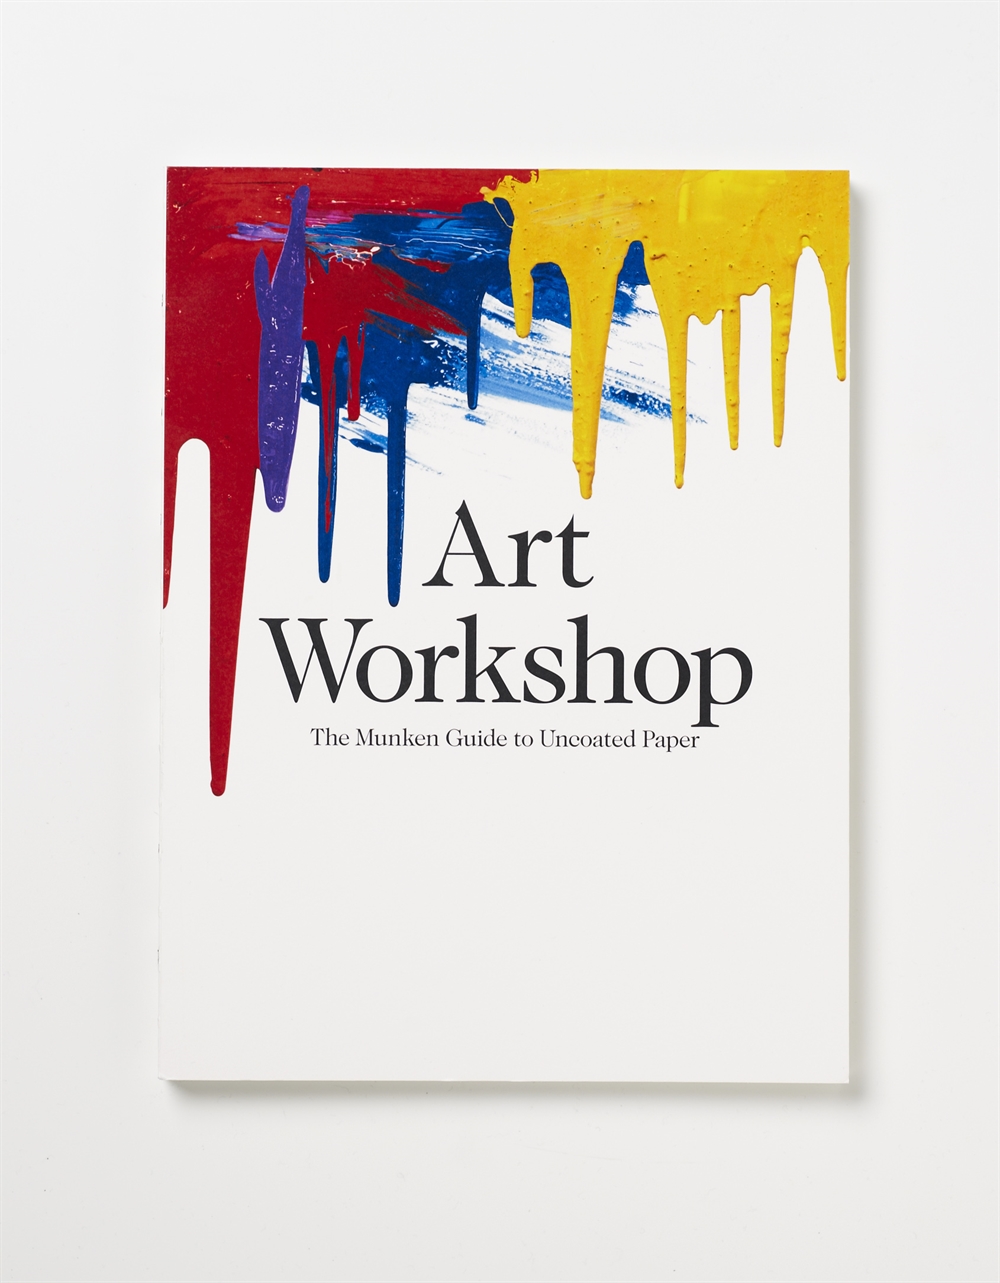 Art Workshop - The Munken Guide to Uncoated Paper